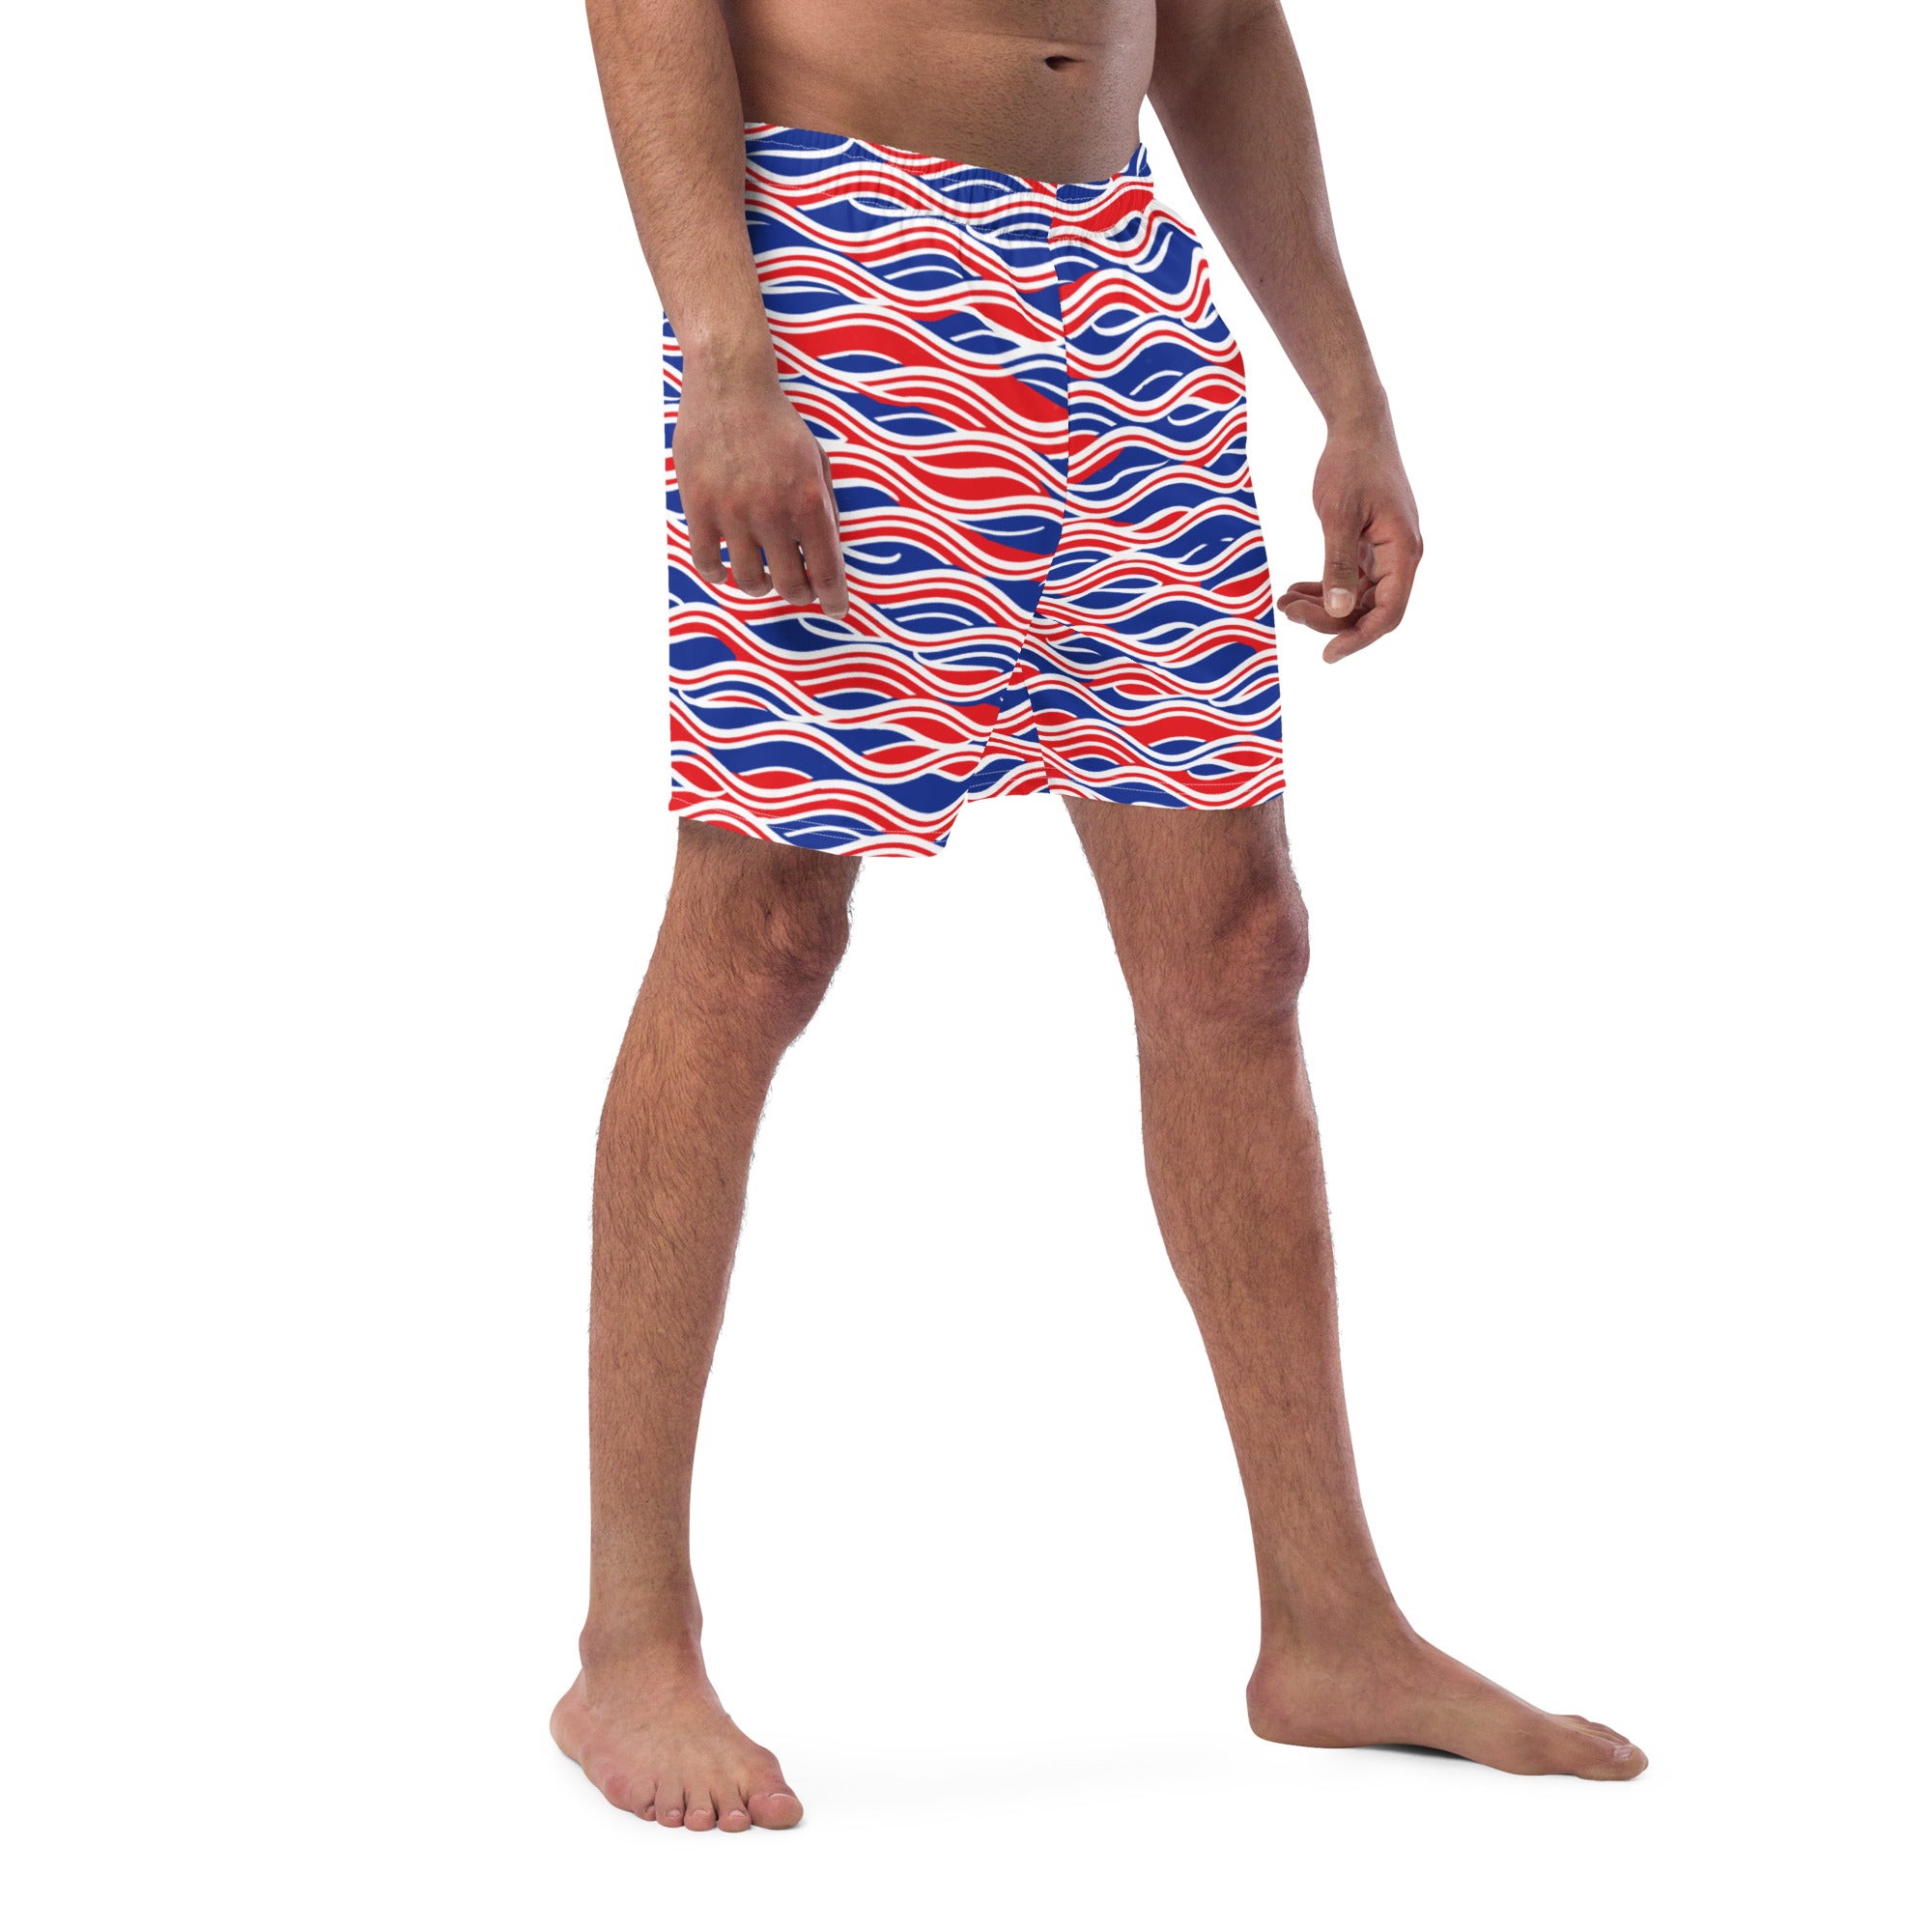 TORRENT swim trunks